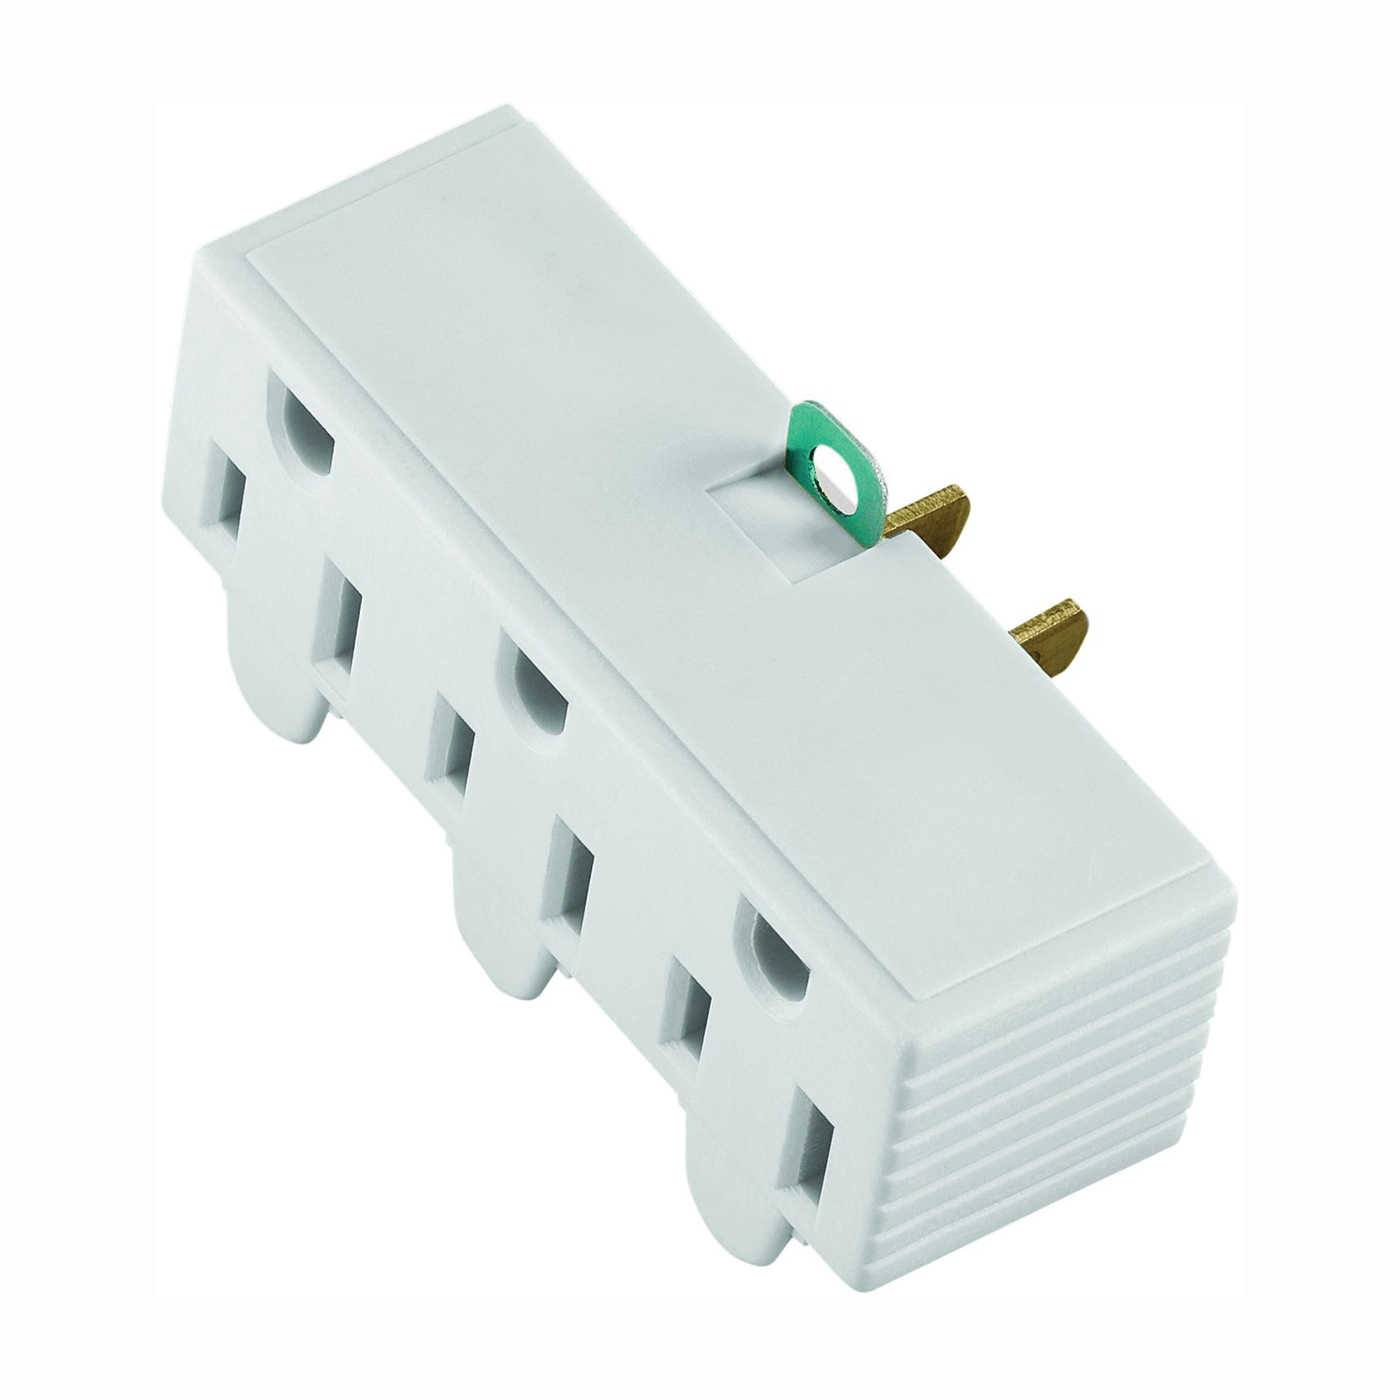 BP1219W Outlet Adapter, 2 -Pole, 15 A, 125 V, 3 -Outlet, NEMA: NEMA 1-15 to 5-15, White